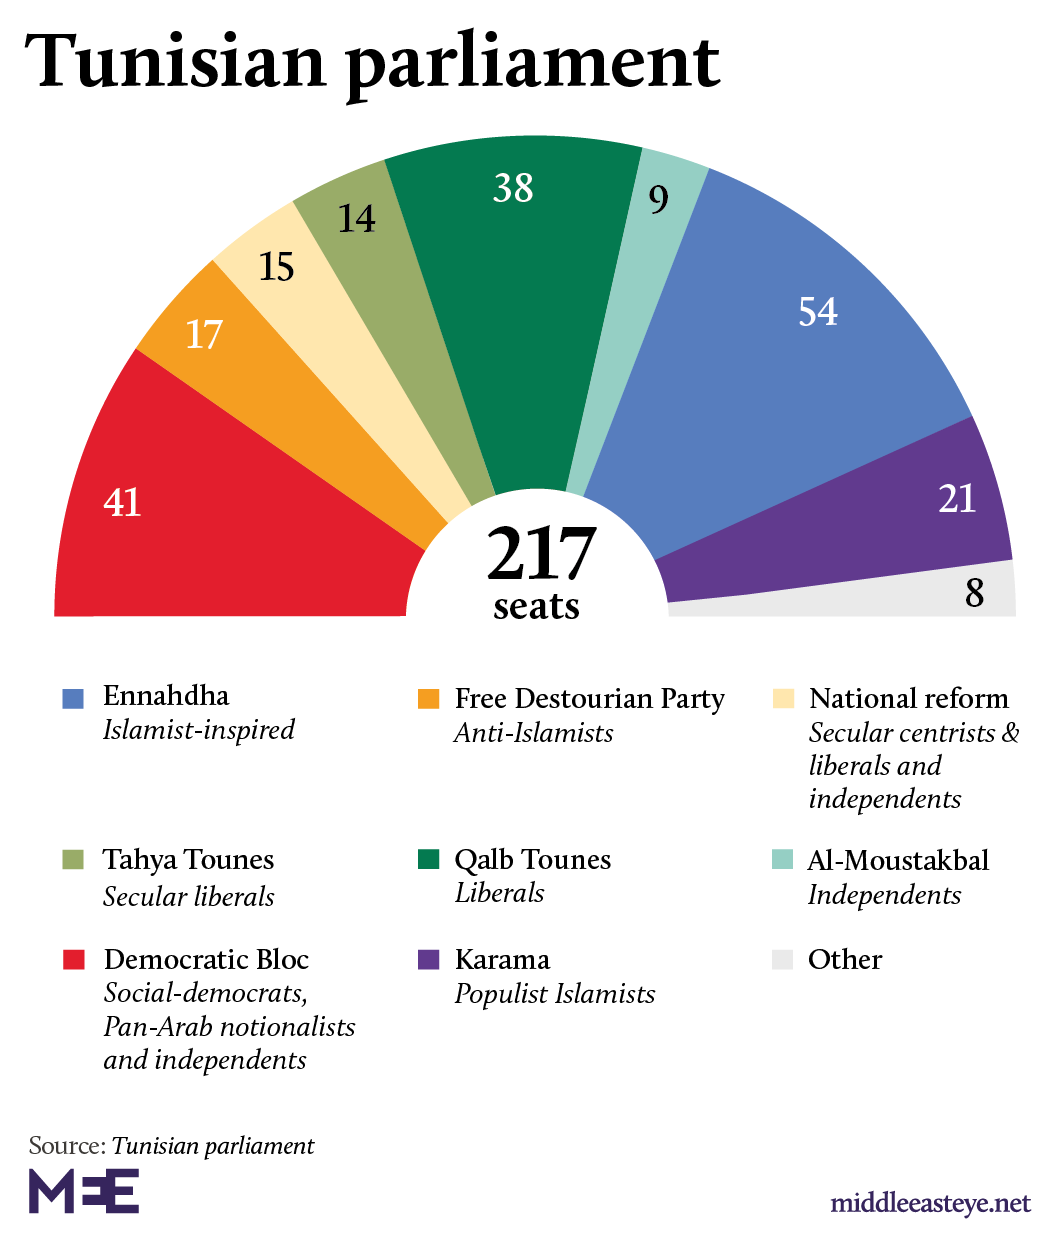 Tunisia parliament: Breakdown of seats